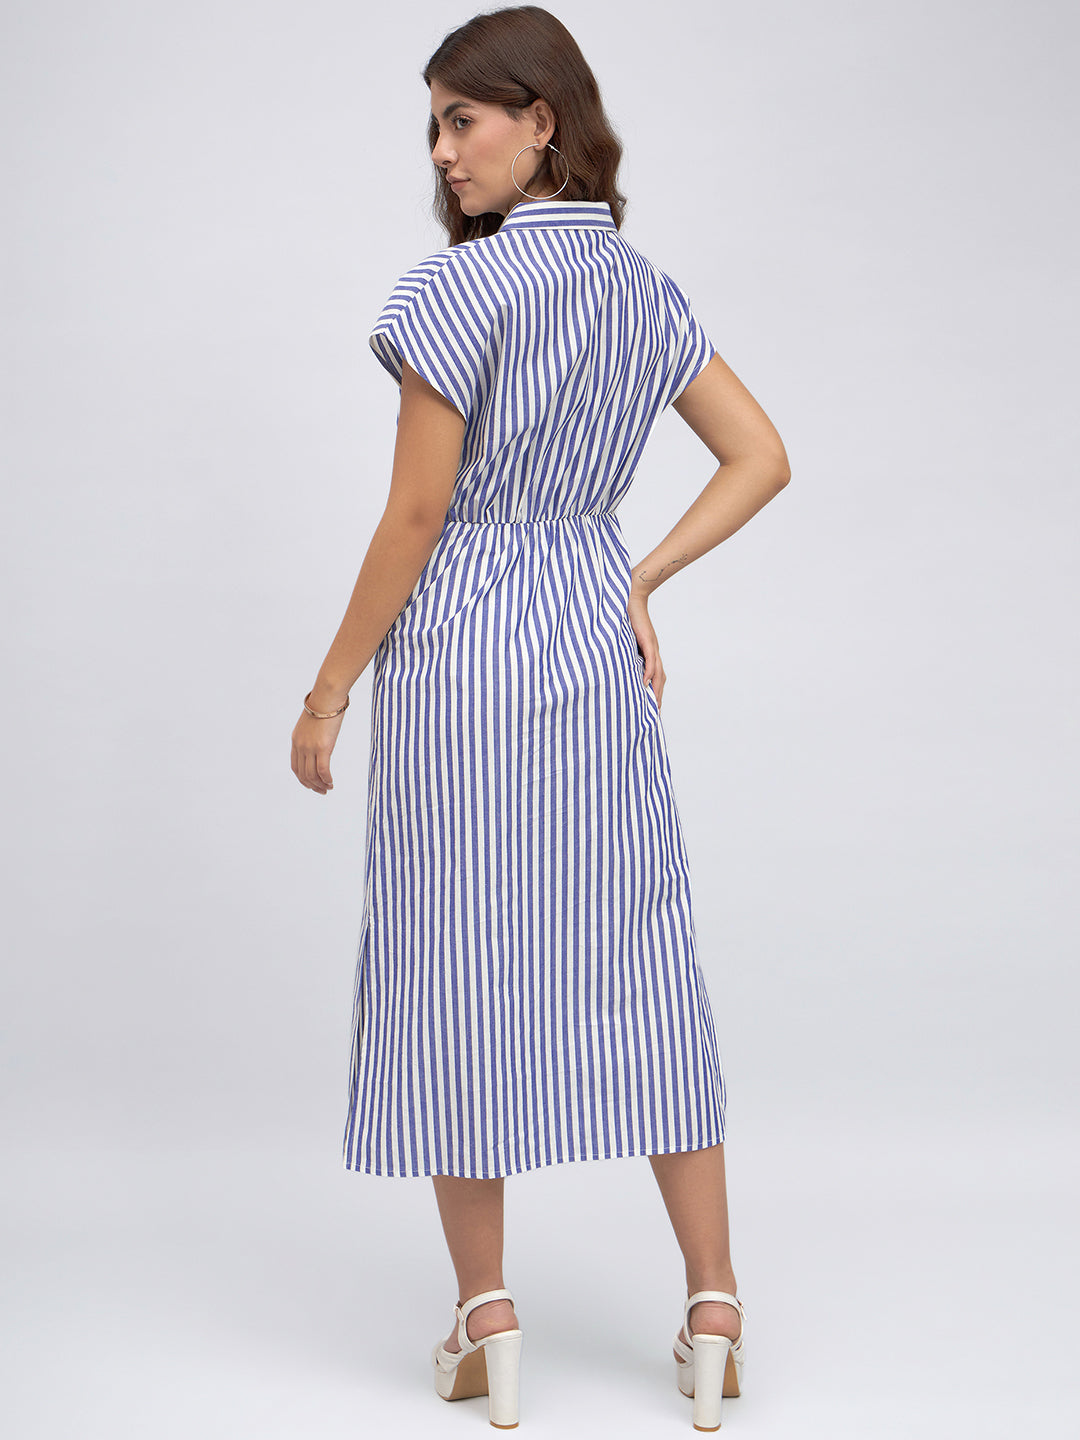 DL Woman Blue Striped Tie-Up Cotton Shirt Style Midi Dress